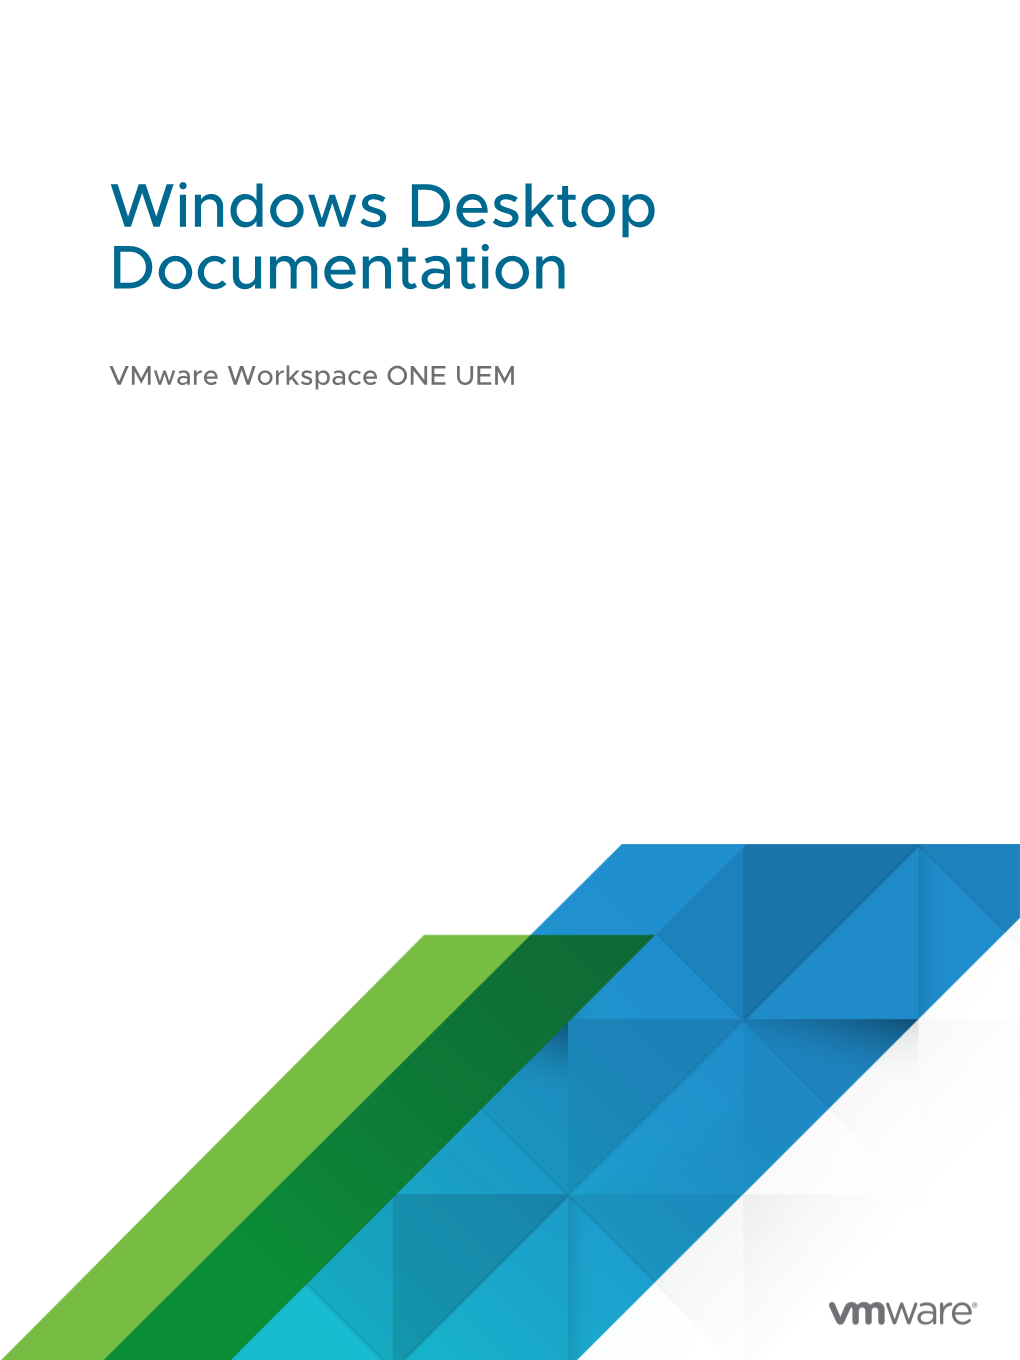 Windows Desktop Documentation